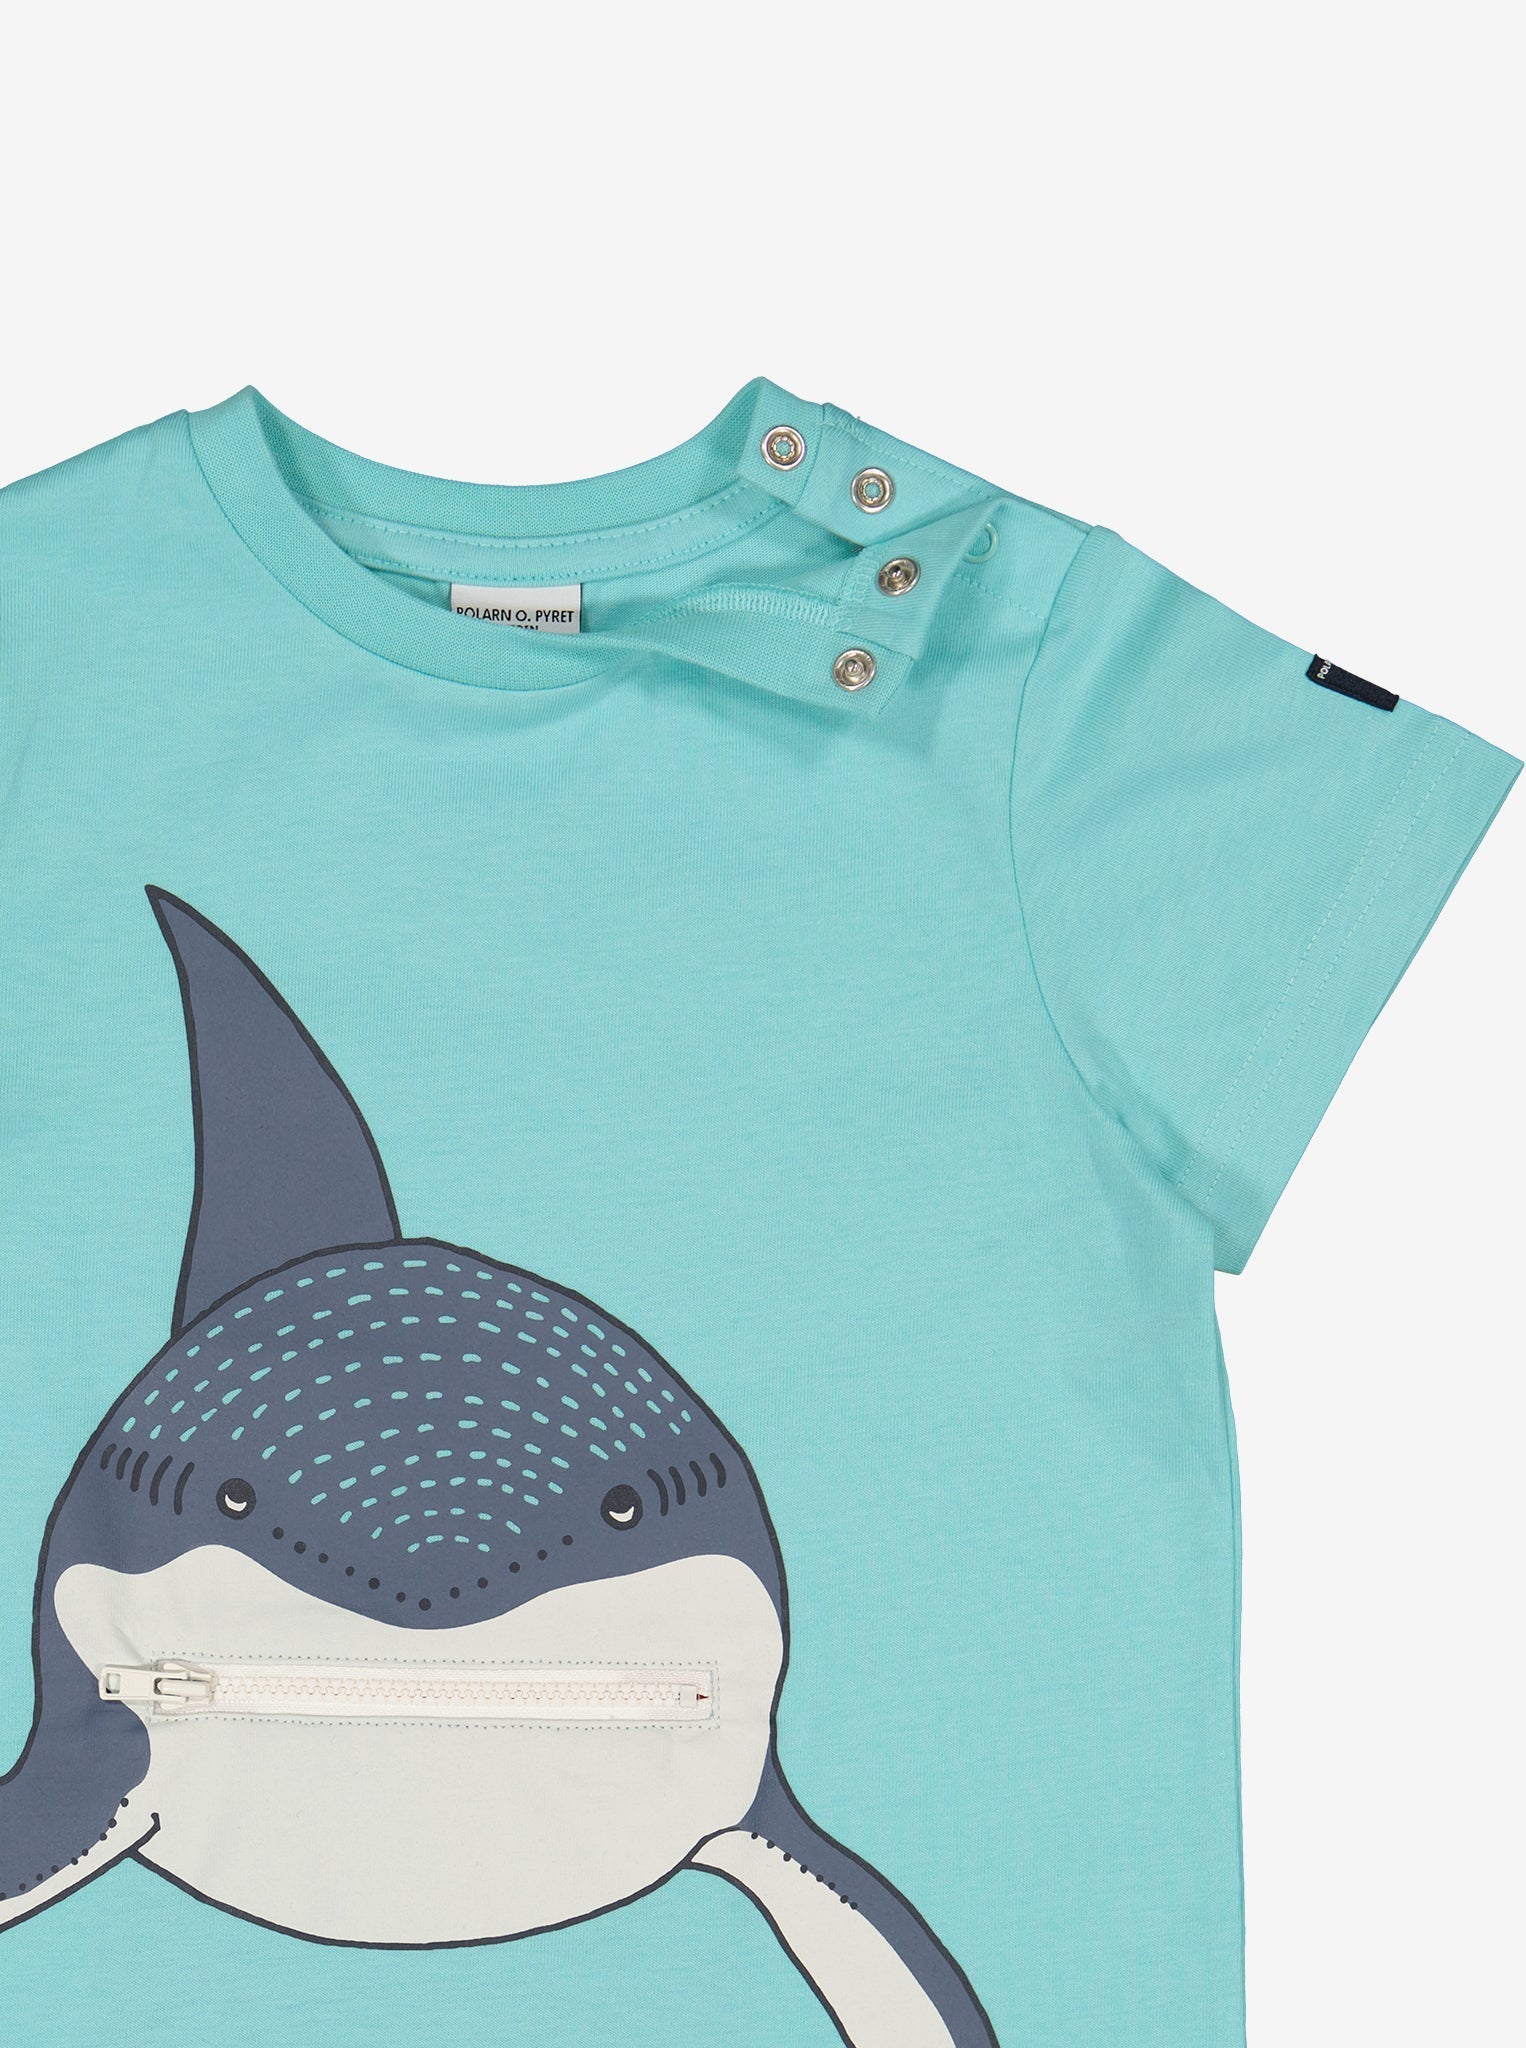 Blue Shark Print Kids T-Shirt from Polarn O. Pyret Kidswear. Made from 100% GOTS Organic Cotton.